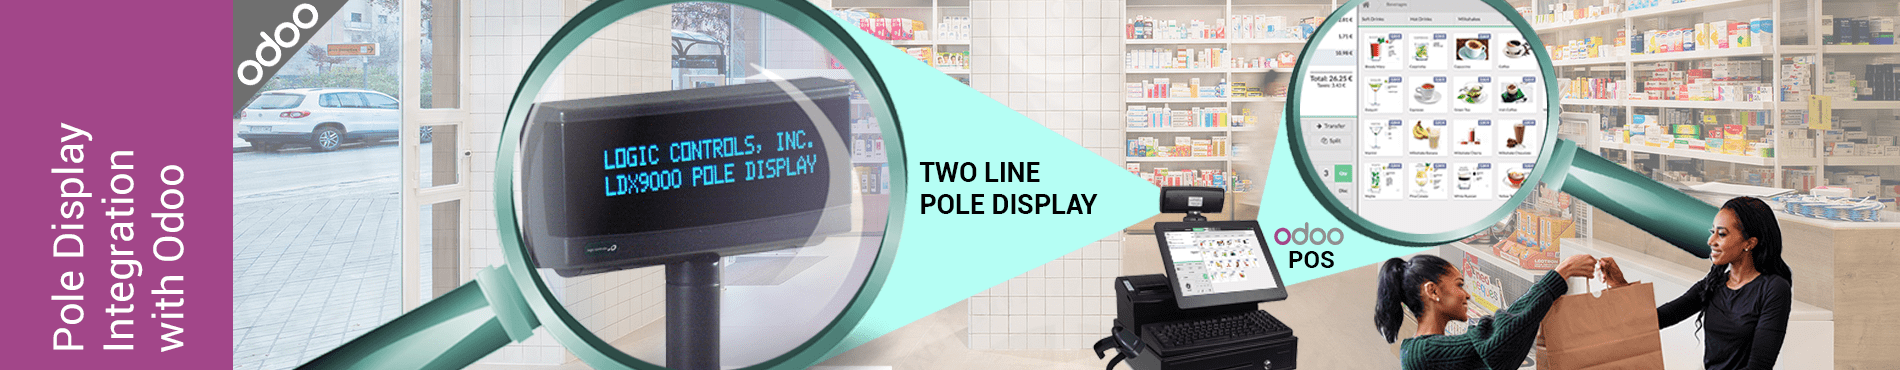 pole display integration with odoo